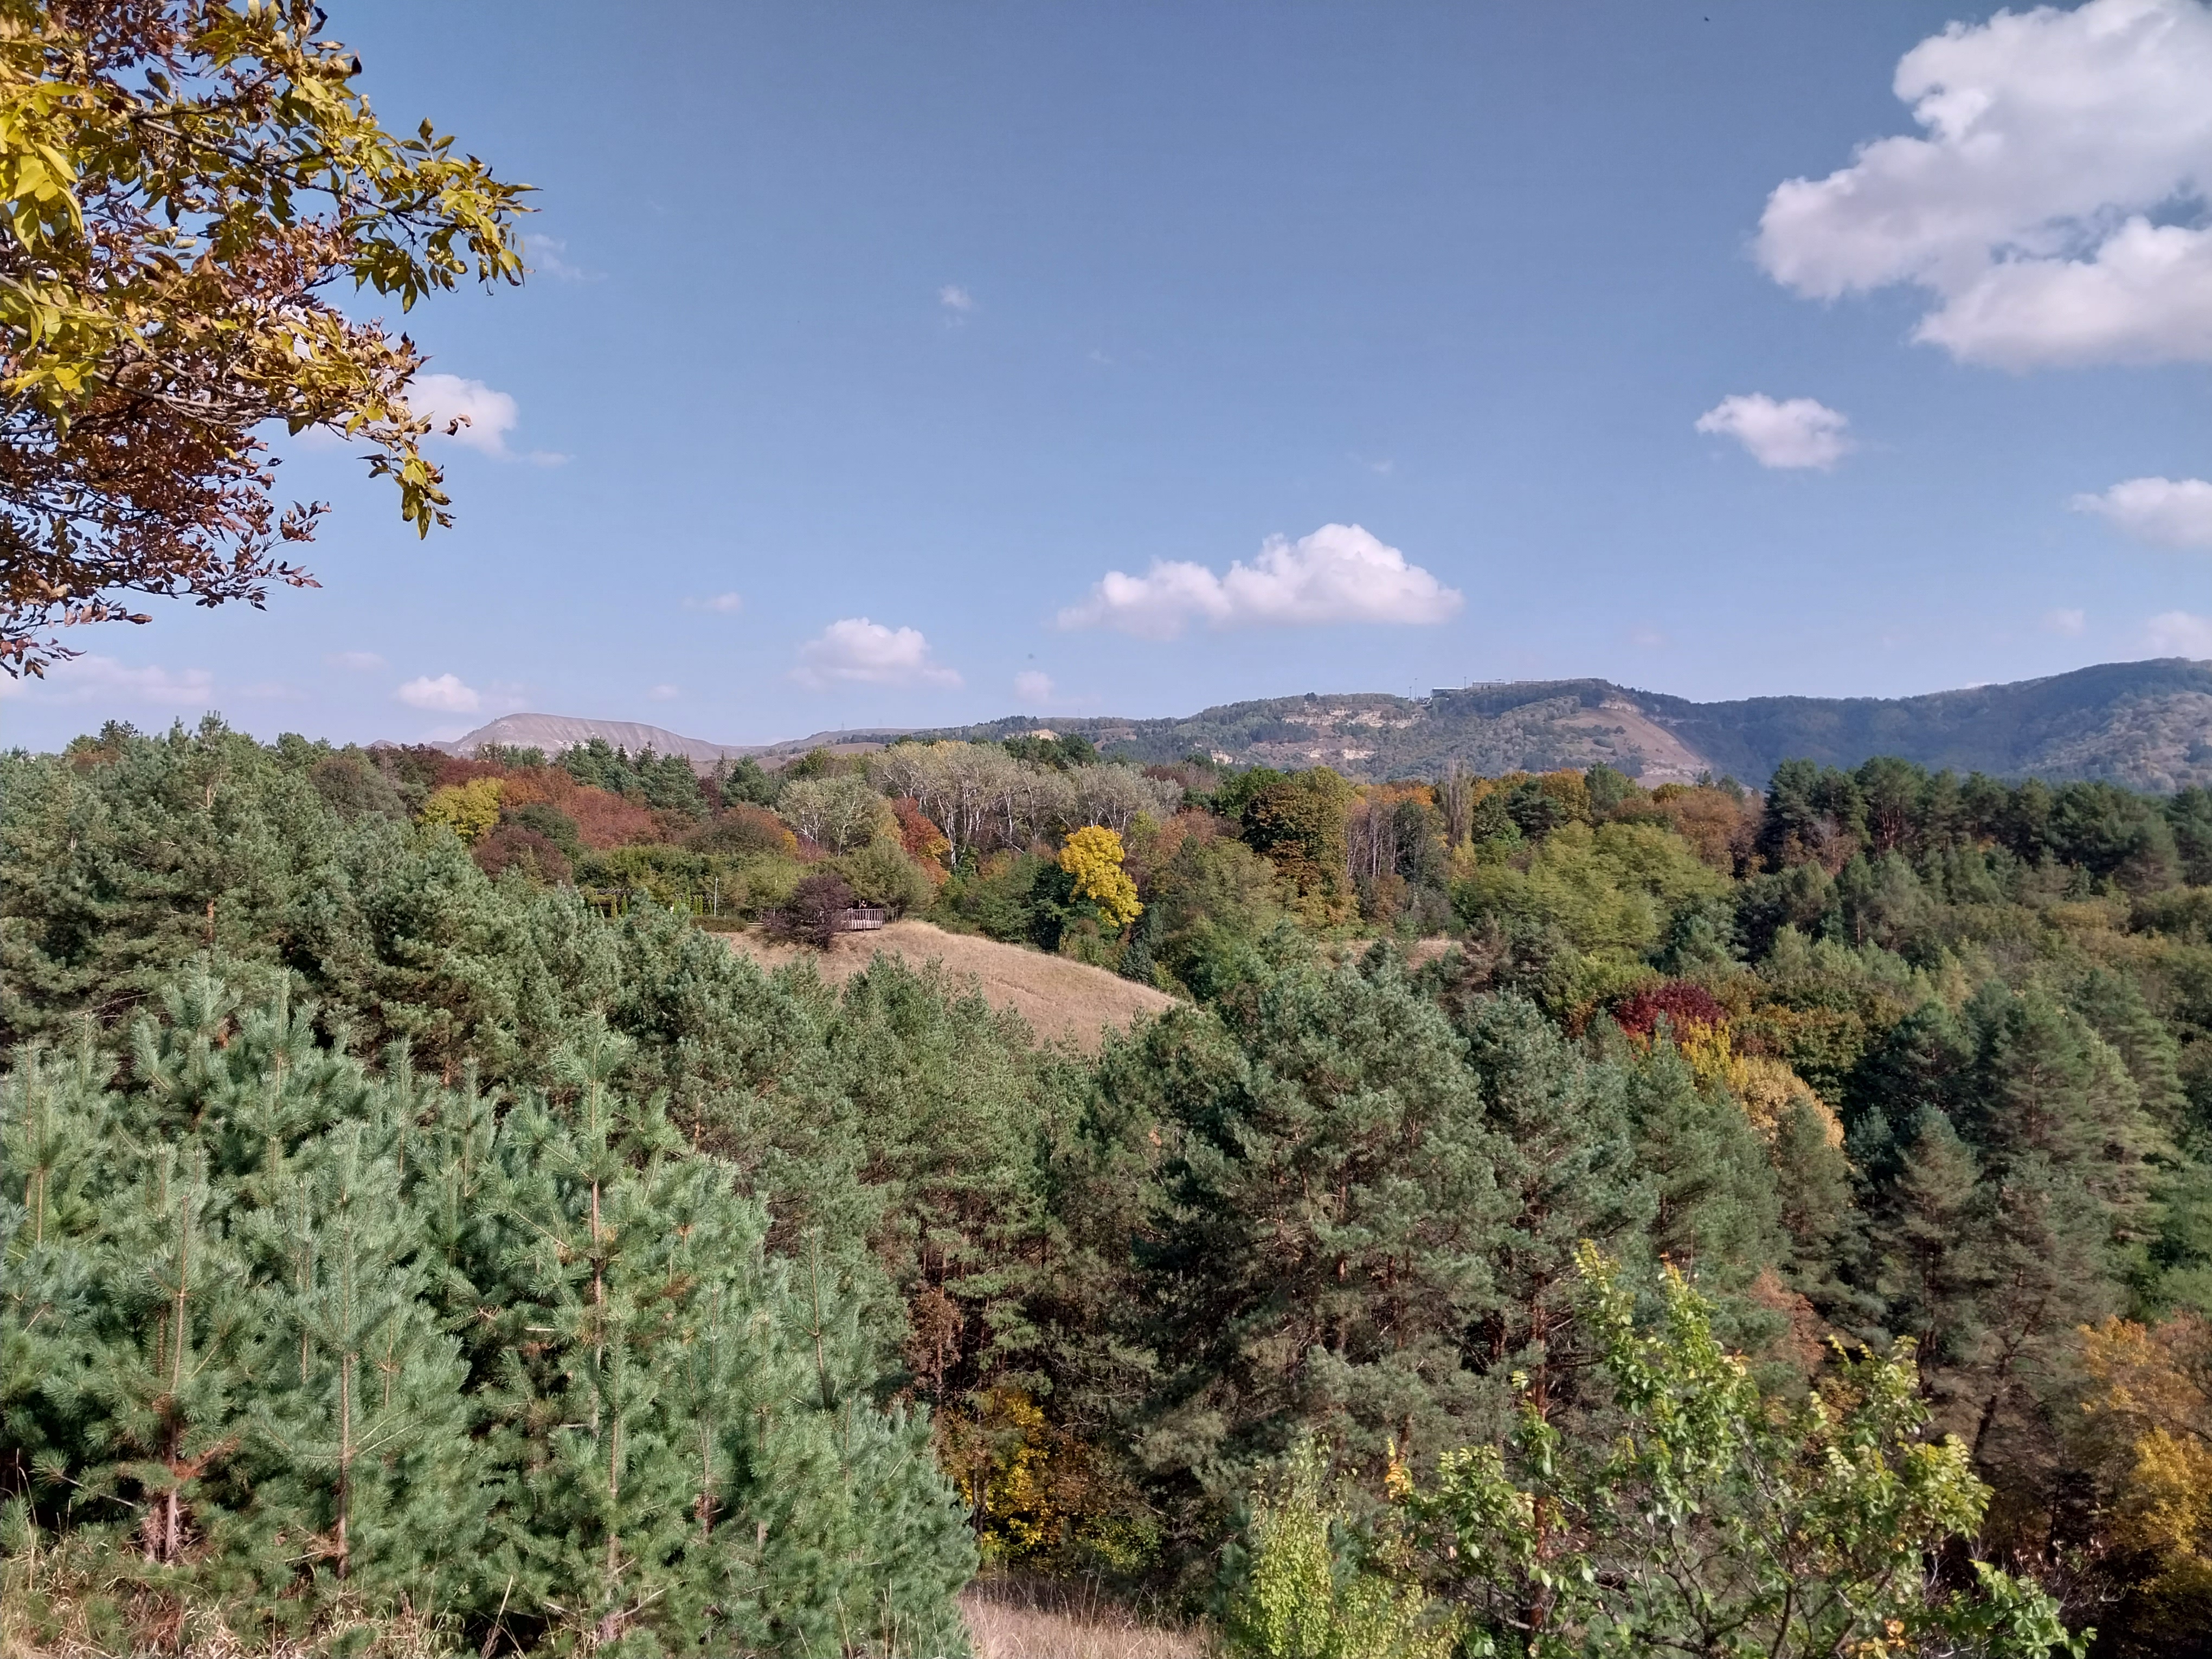 A forest landscape in October